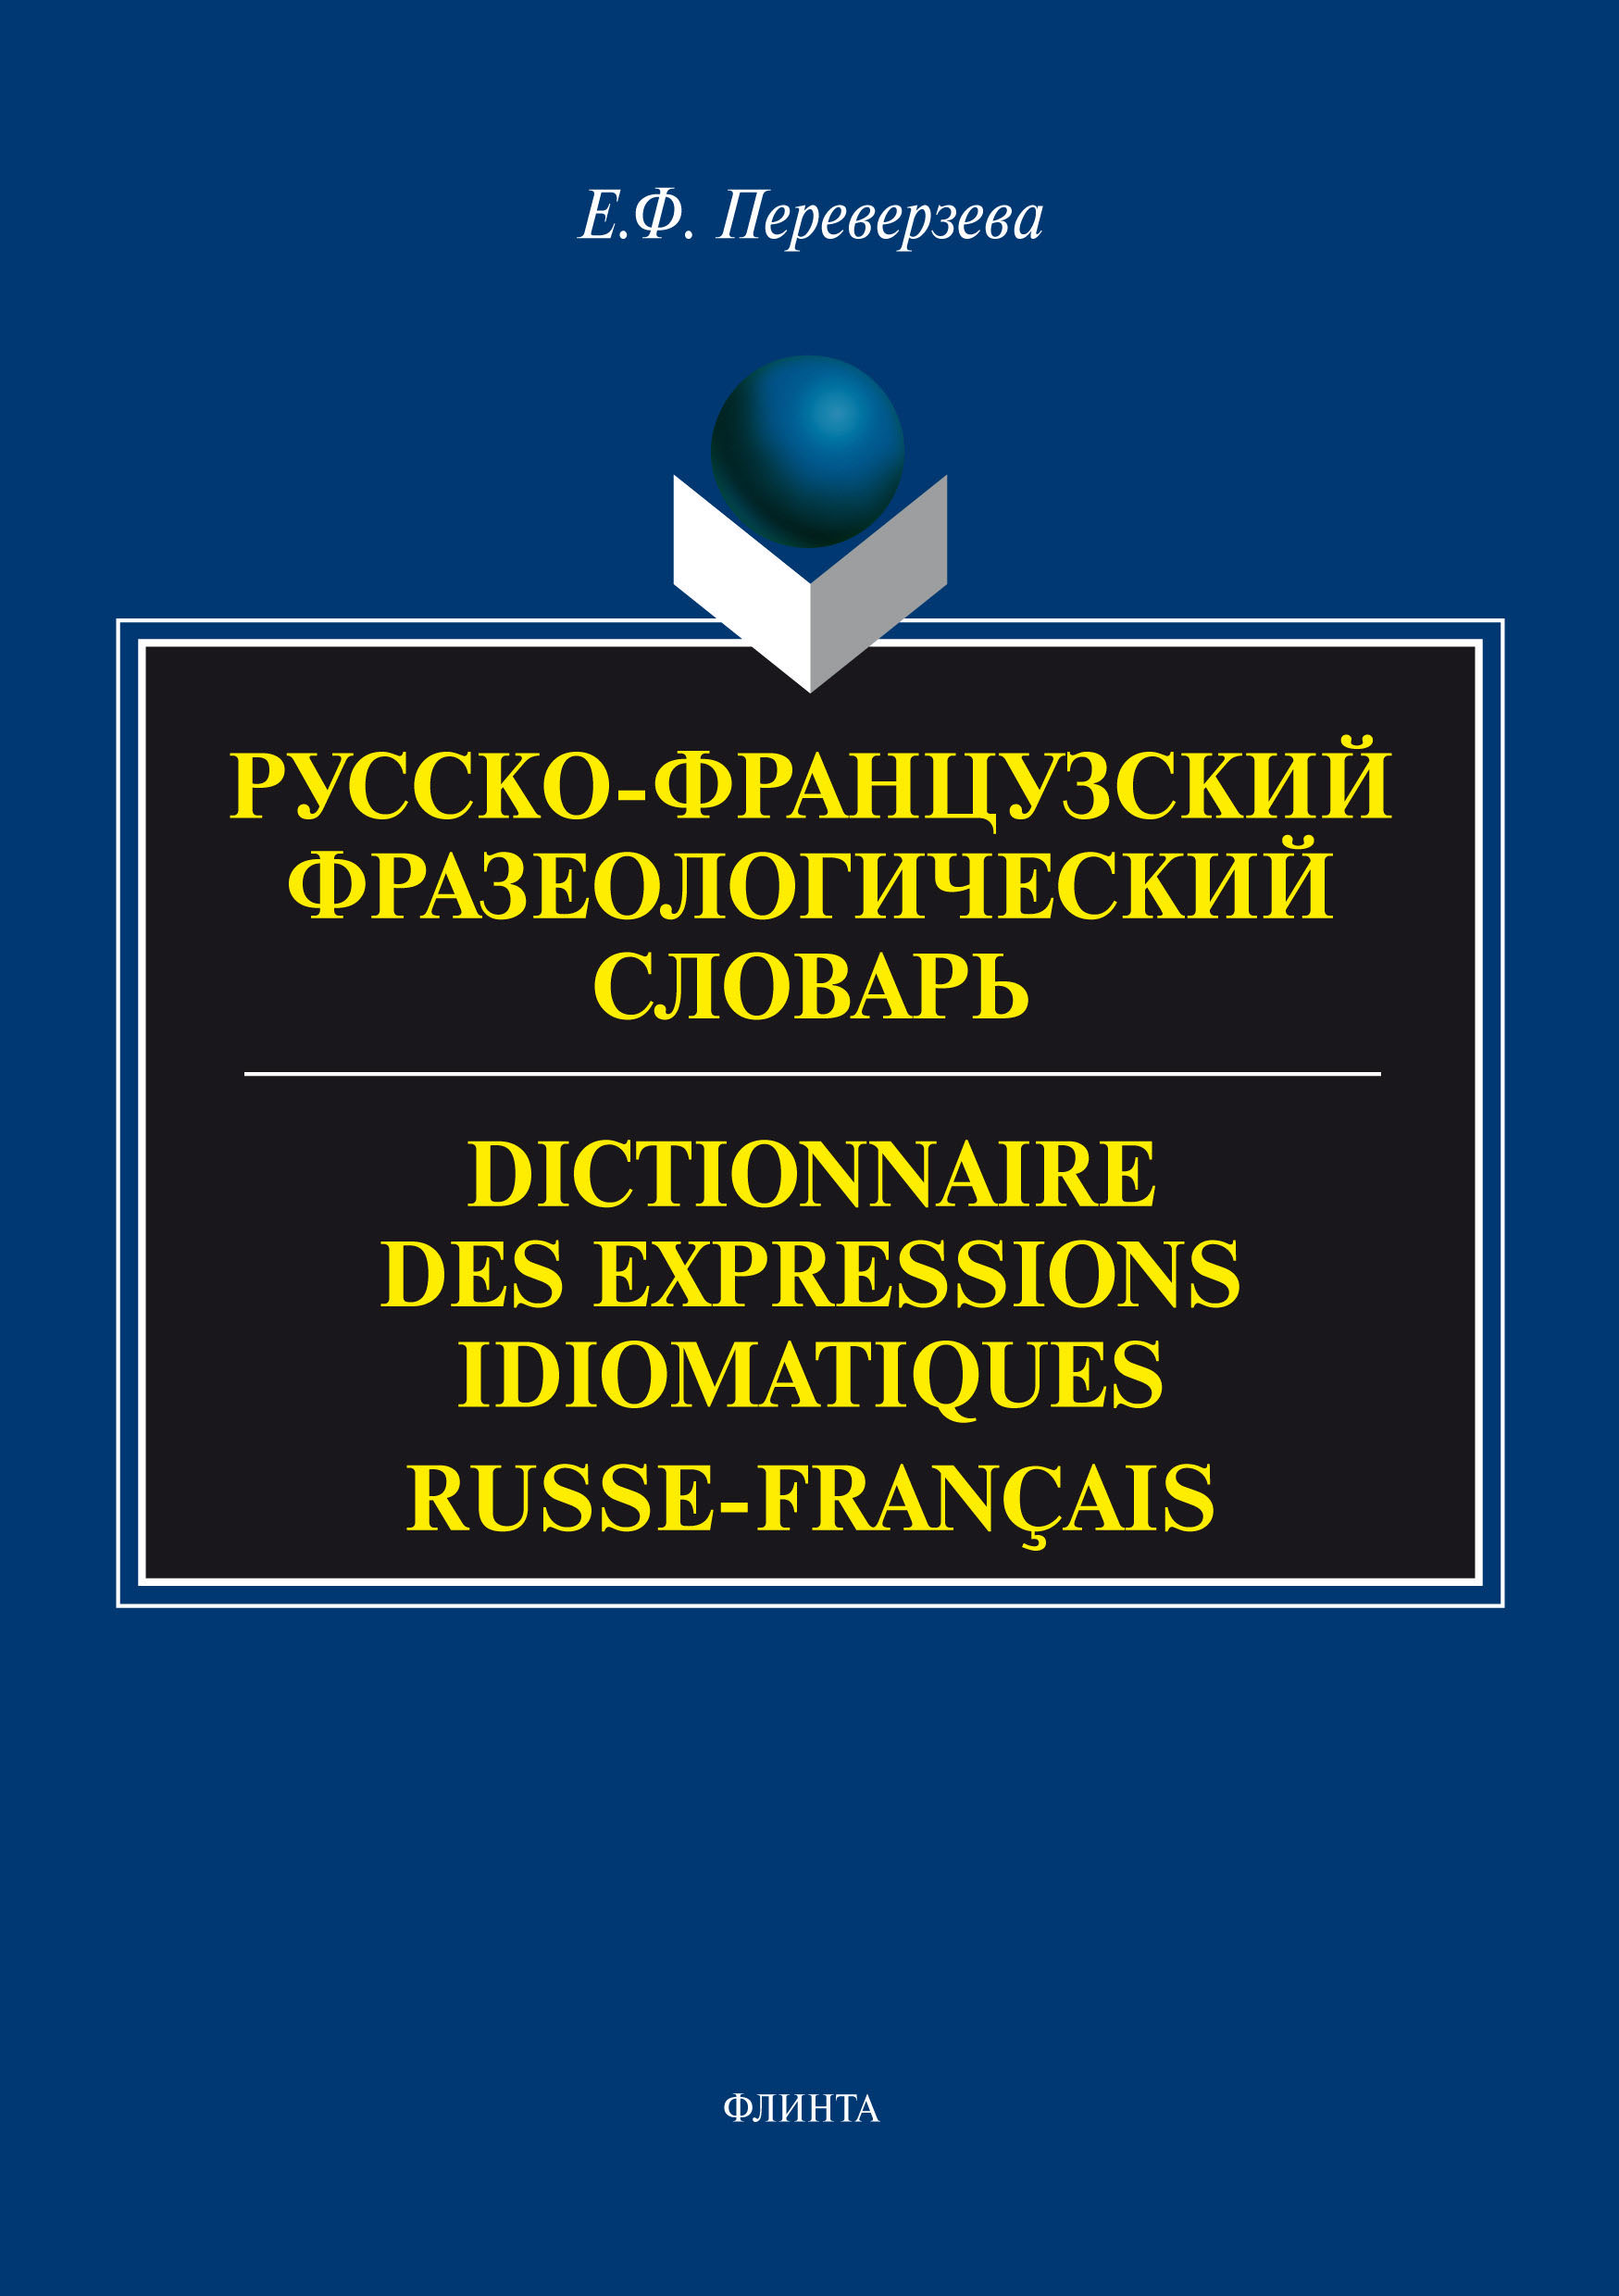 Русско-французский фразеологический словарь / Dictionnaire des expressions idiomatiques russe-français